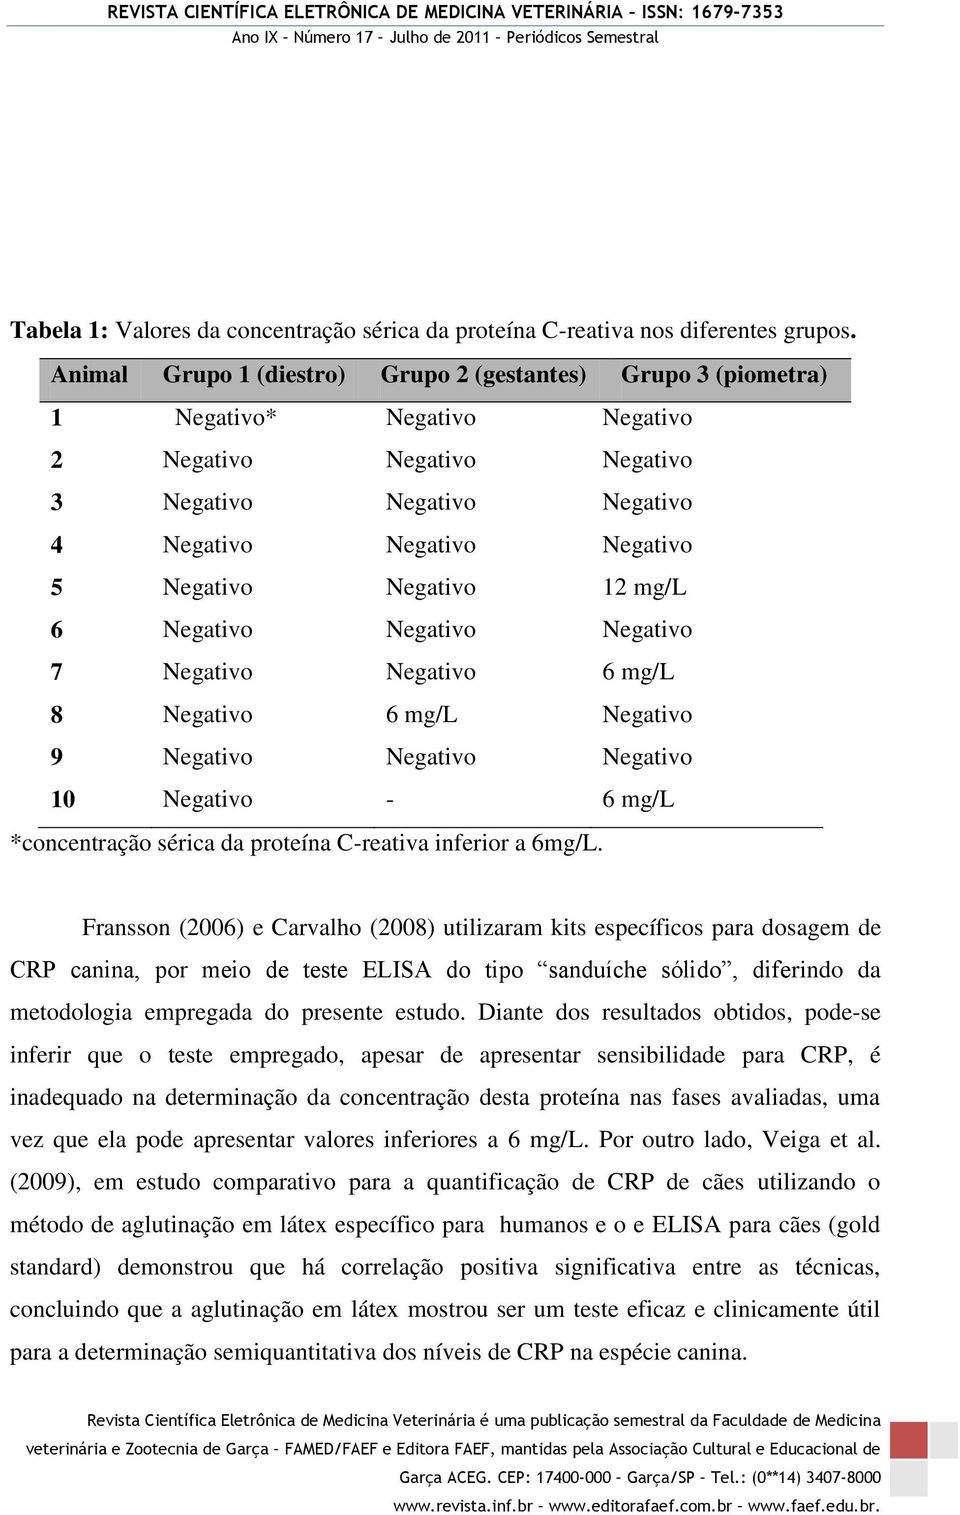 Negativo 12 mg/l 6 Negativo Negativo Negativo 7 Negativo Negativo 6 mg/l 8 Negativo 6 mg/l Negativo 9 Negativo Negativo Negativo 10 Negativo - 6 mg/l *concentração sérica da proteína C-reativa